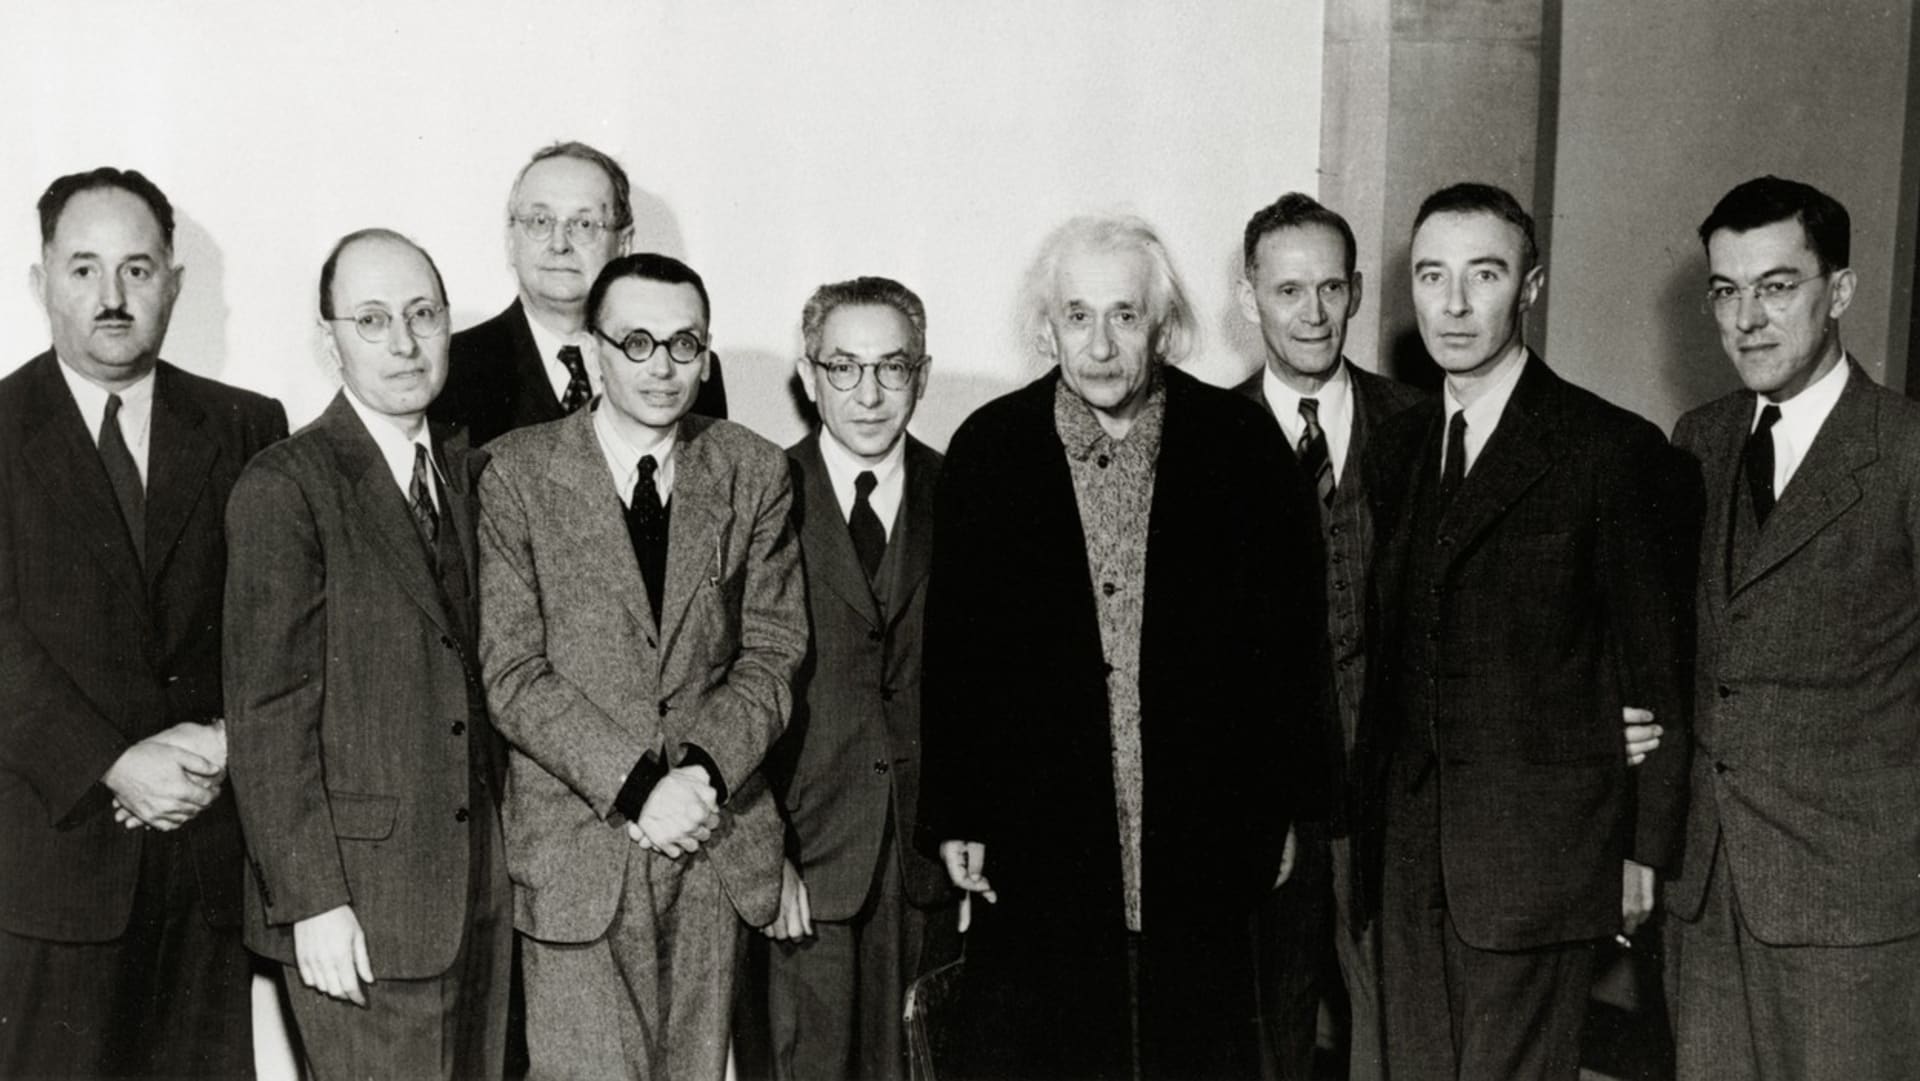 Oslava 70. narozenin Alberta Einsteina v Institutu pro pokročilá studia v roce 1949. Z leva doprava stojí H. P. Robertson, E. Wigner, H. Weyl, K. Goedel, I. I. Rabi, Albert Einstein, R. Ladenburg, Julius Robert Oppenheimer a G. M. Clemence.